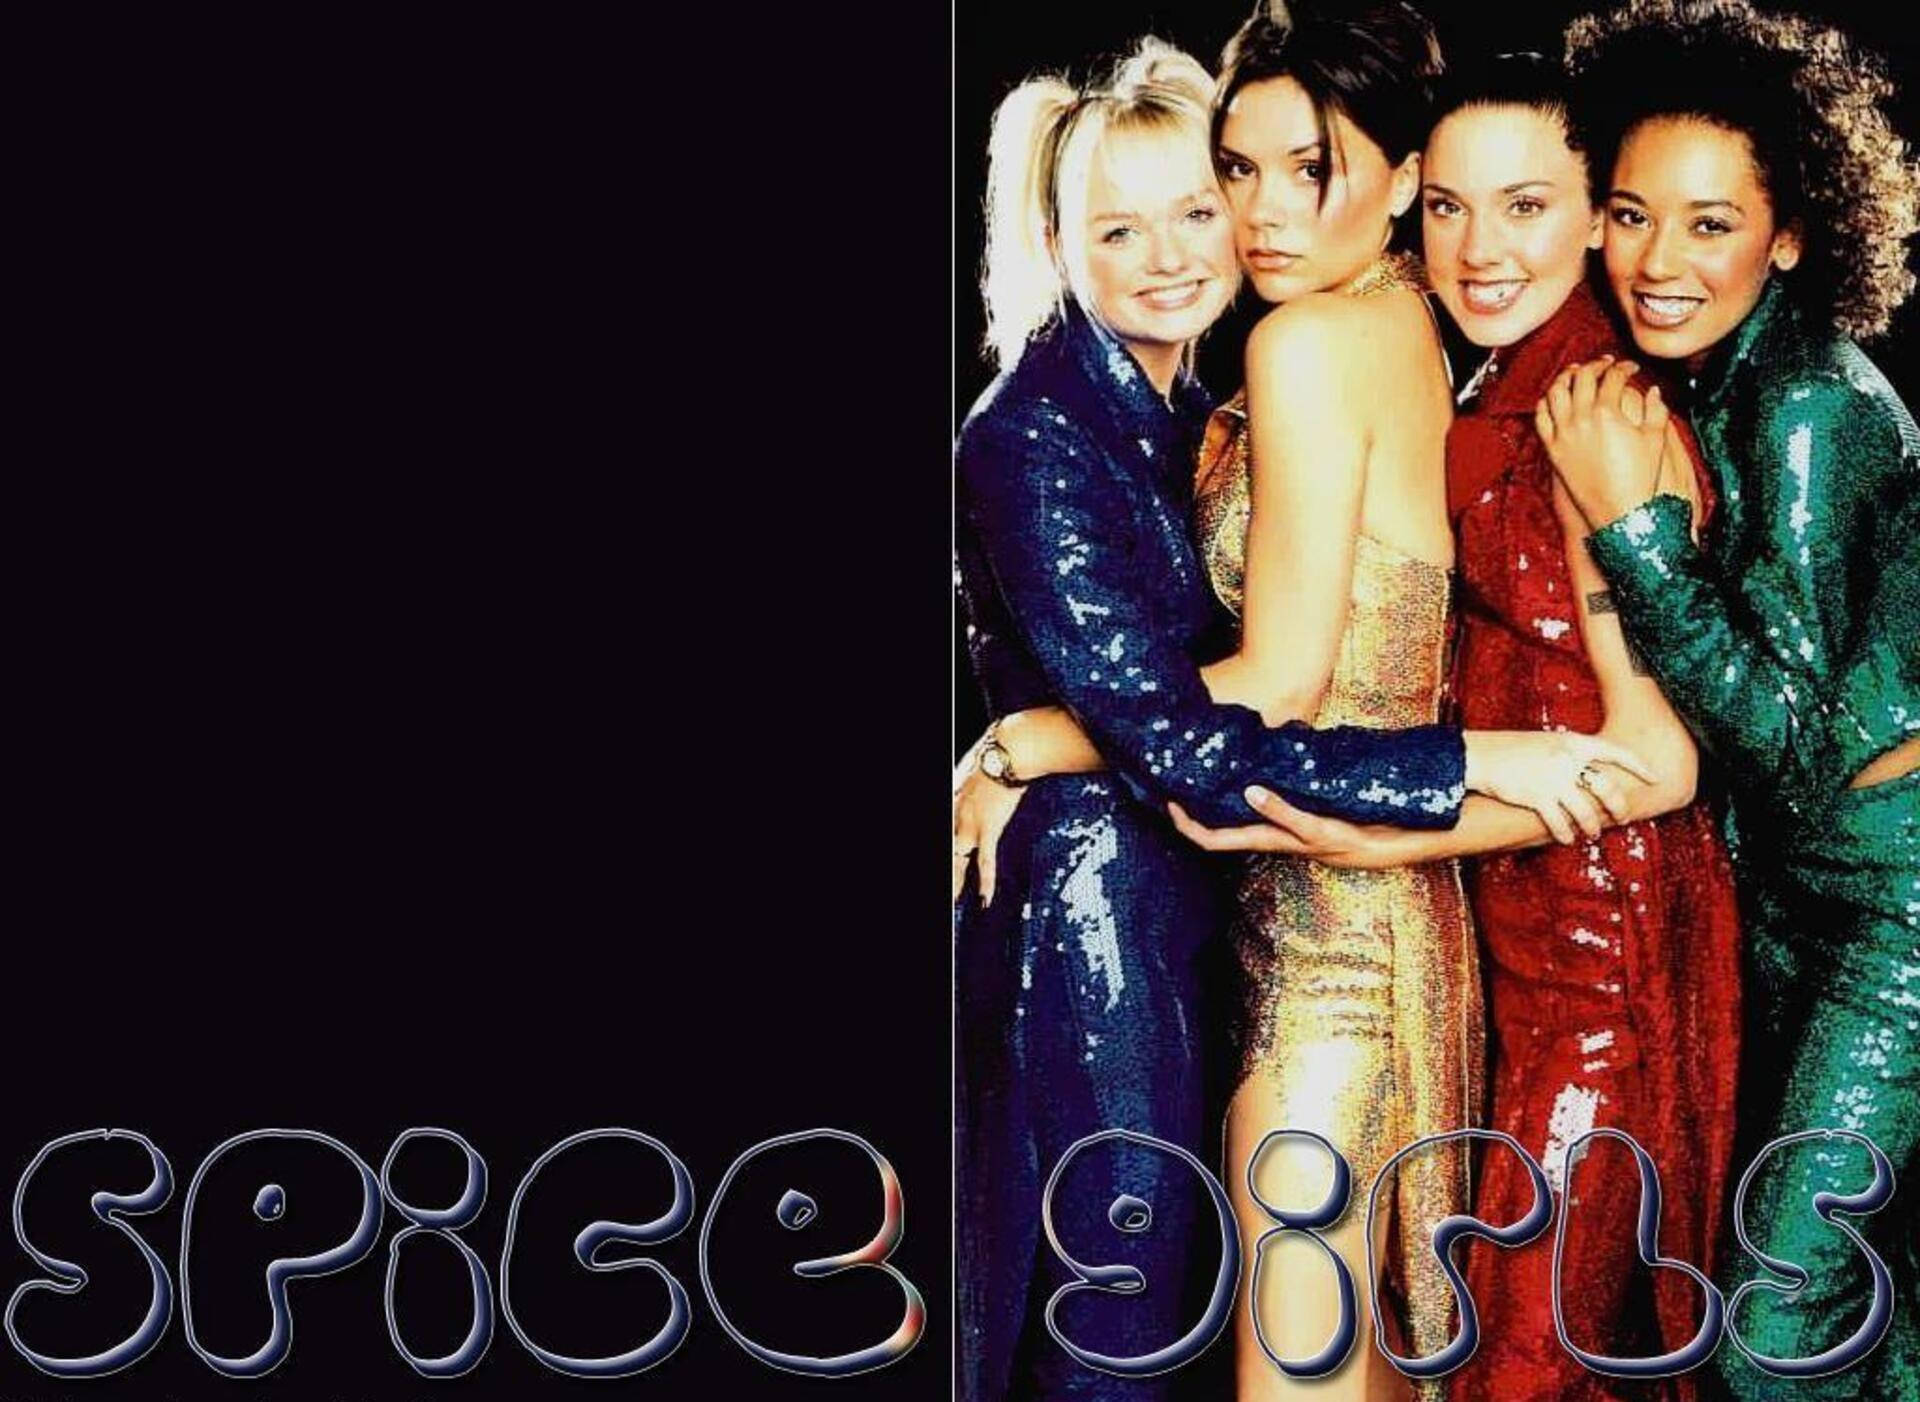 Glittery Spice Girls Photo Shot